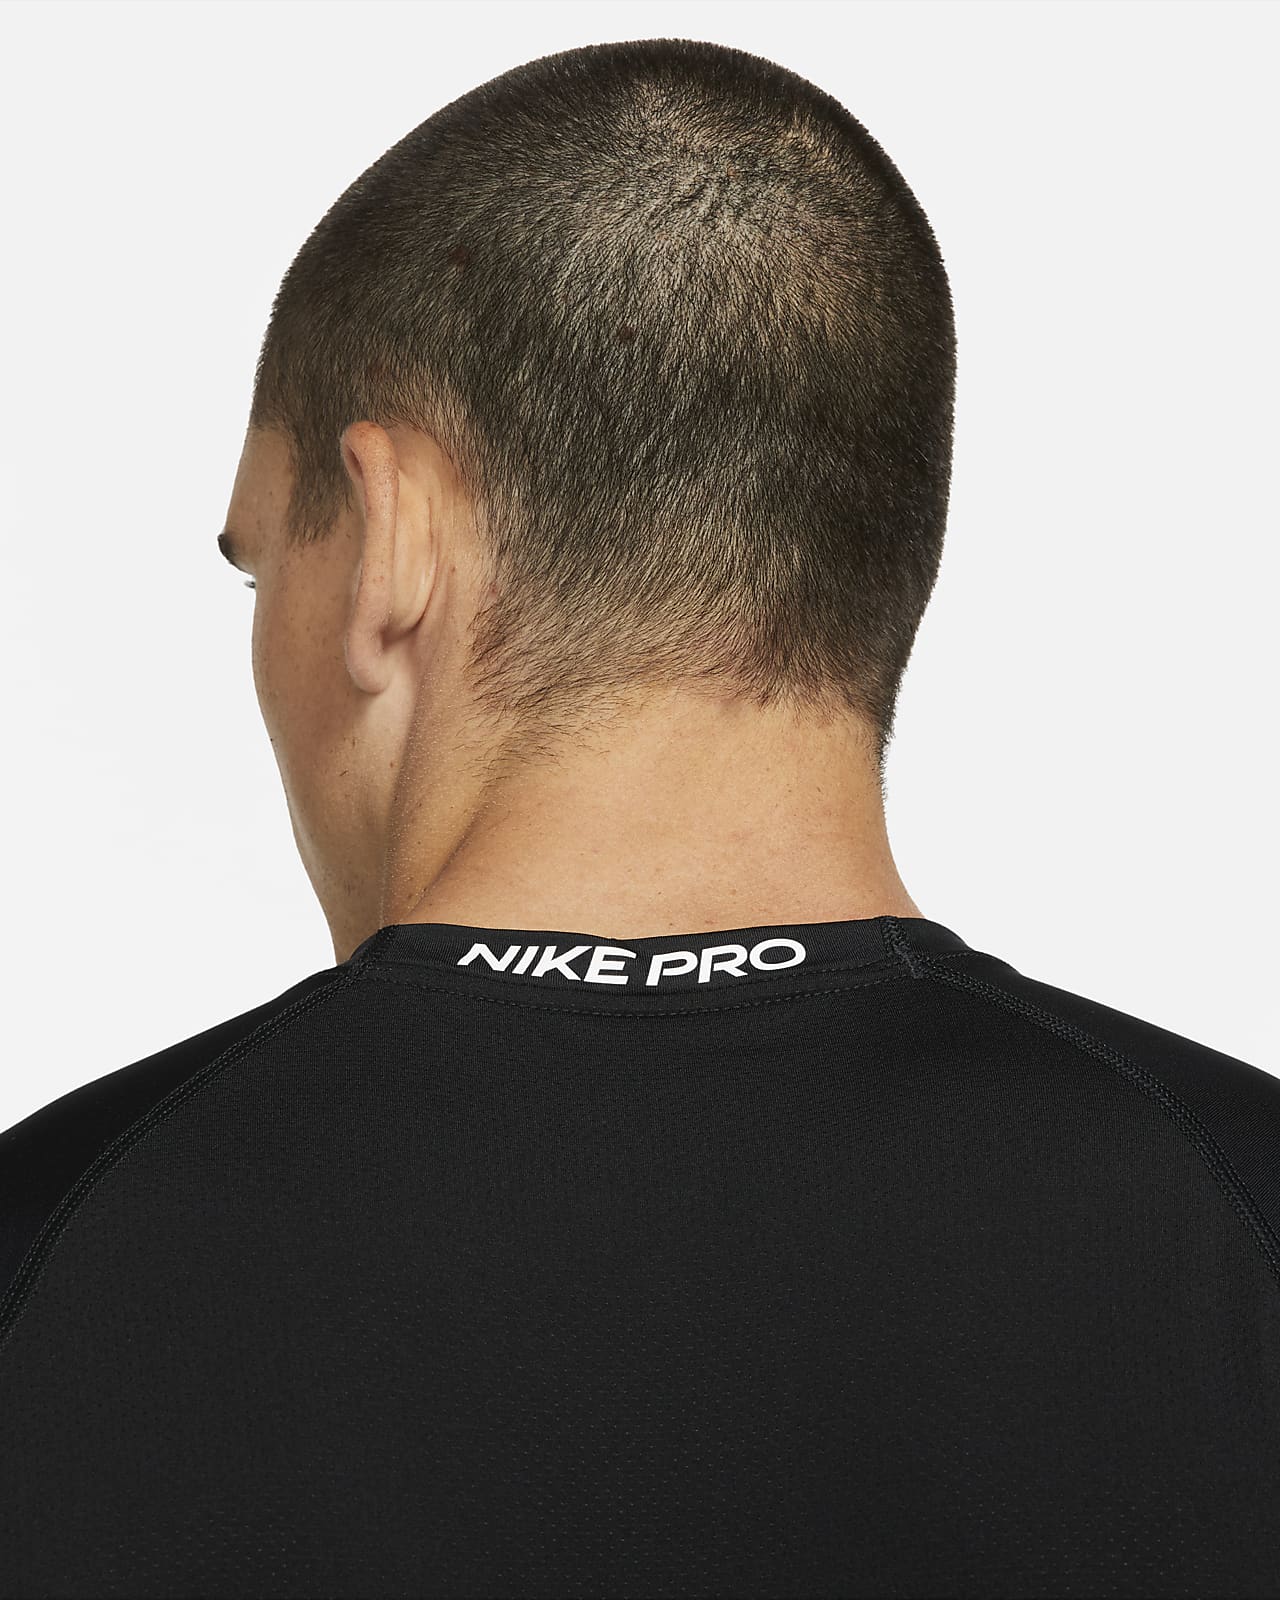 At dawn betray Feud Nike Pro Dri-FIT Men's Slim Fit Sleeveless Top. Nike.com